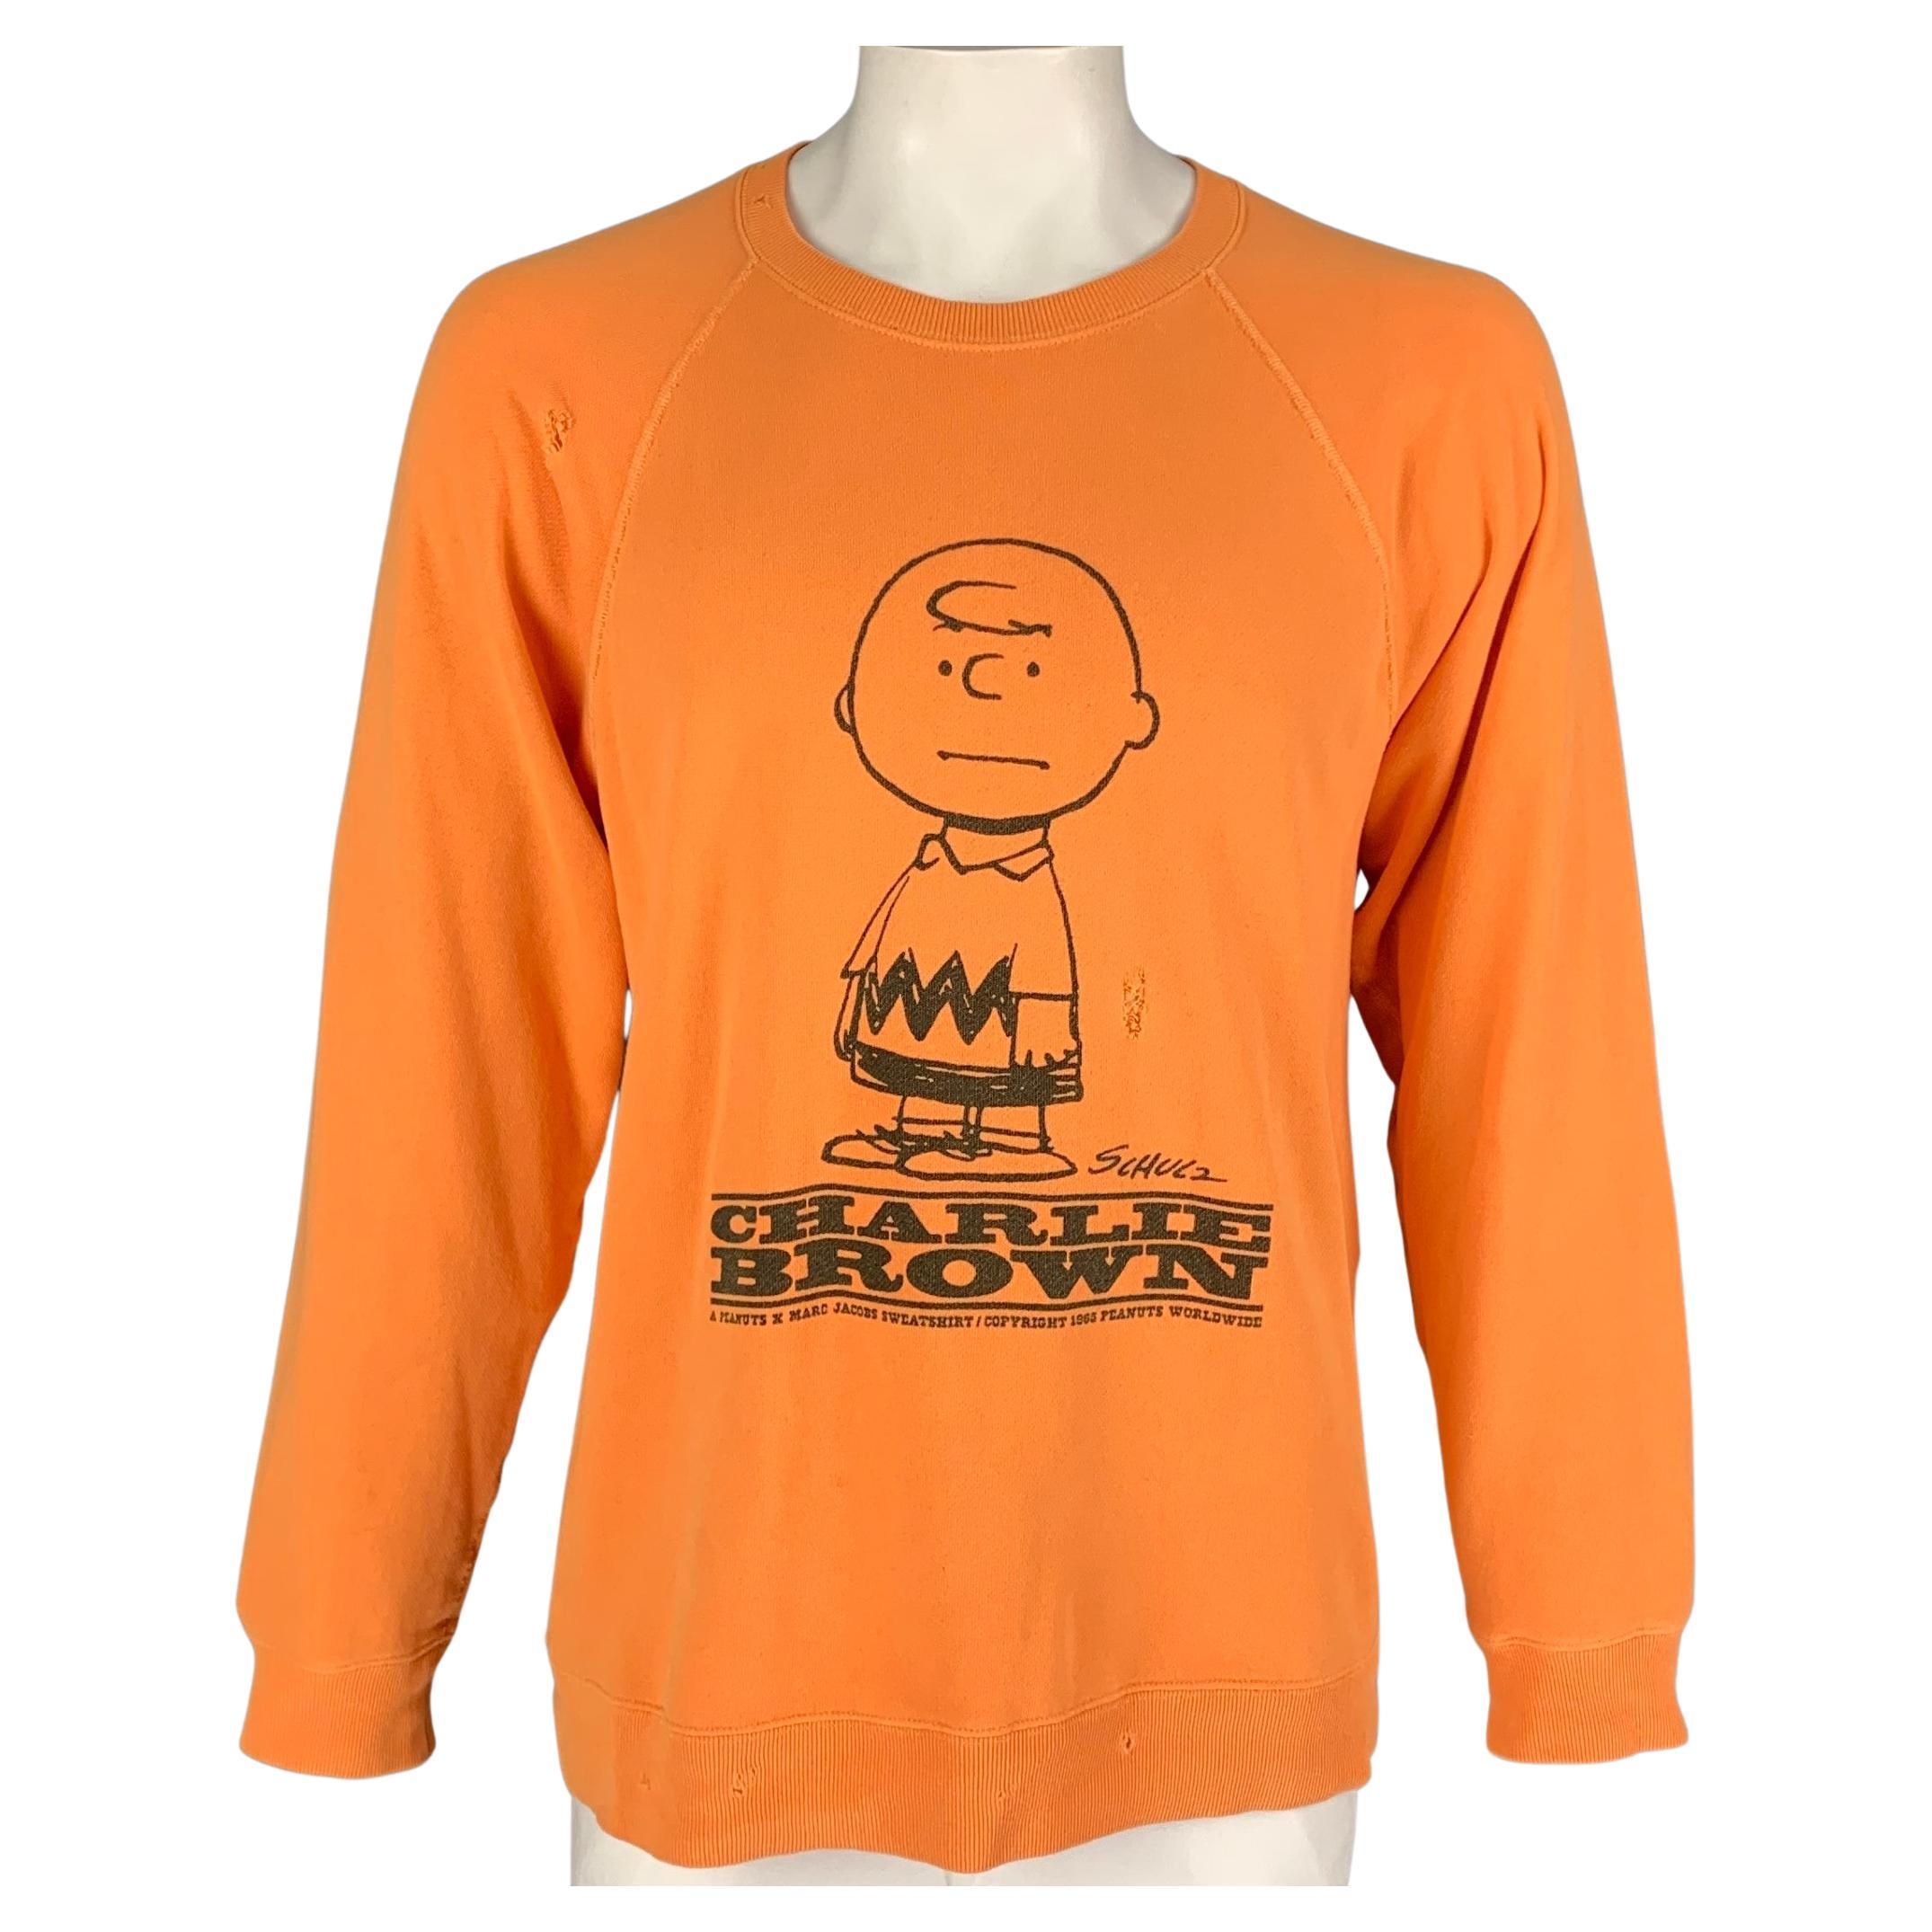 MARC JACOBS x PEANUTS Size L Orange Black Graphic Cotton Crew-Neck Sweatshirt